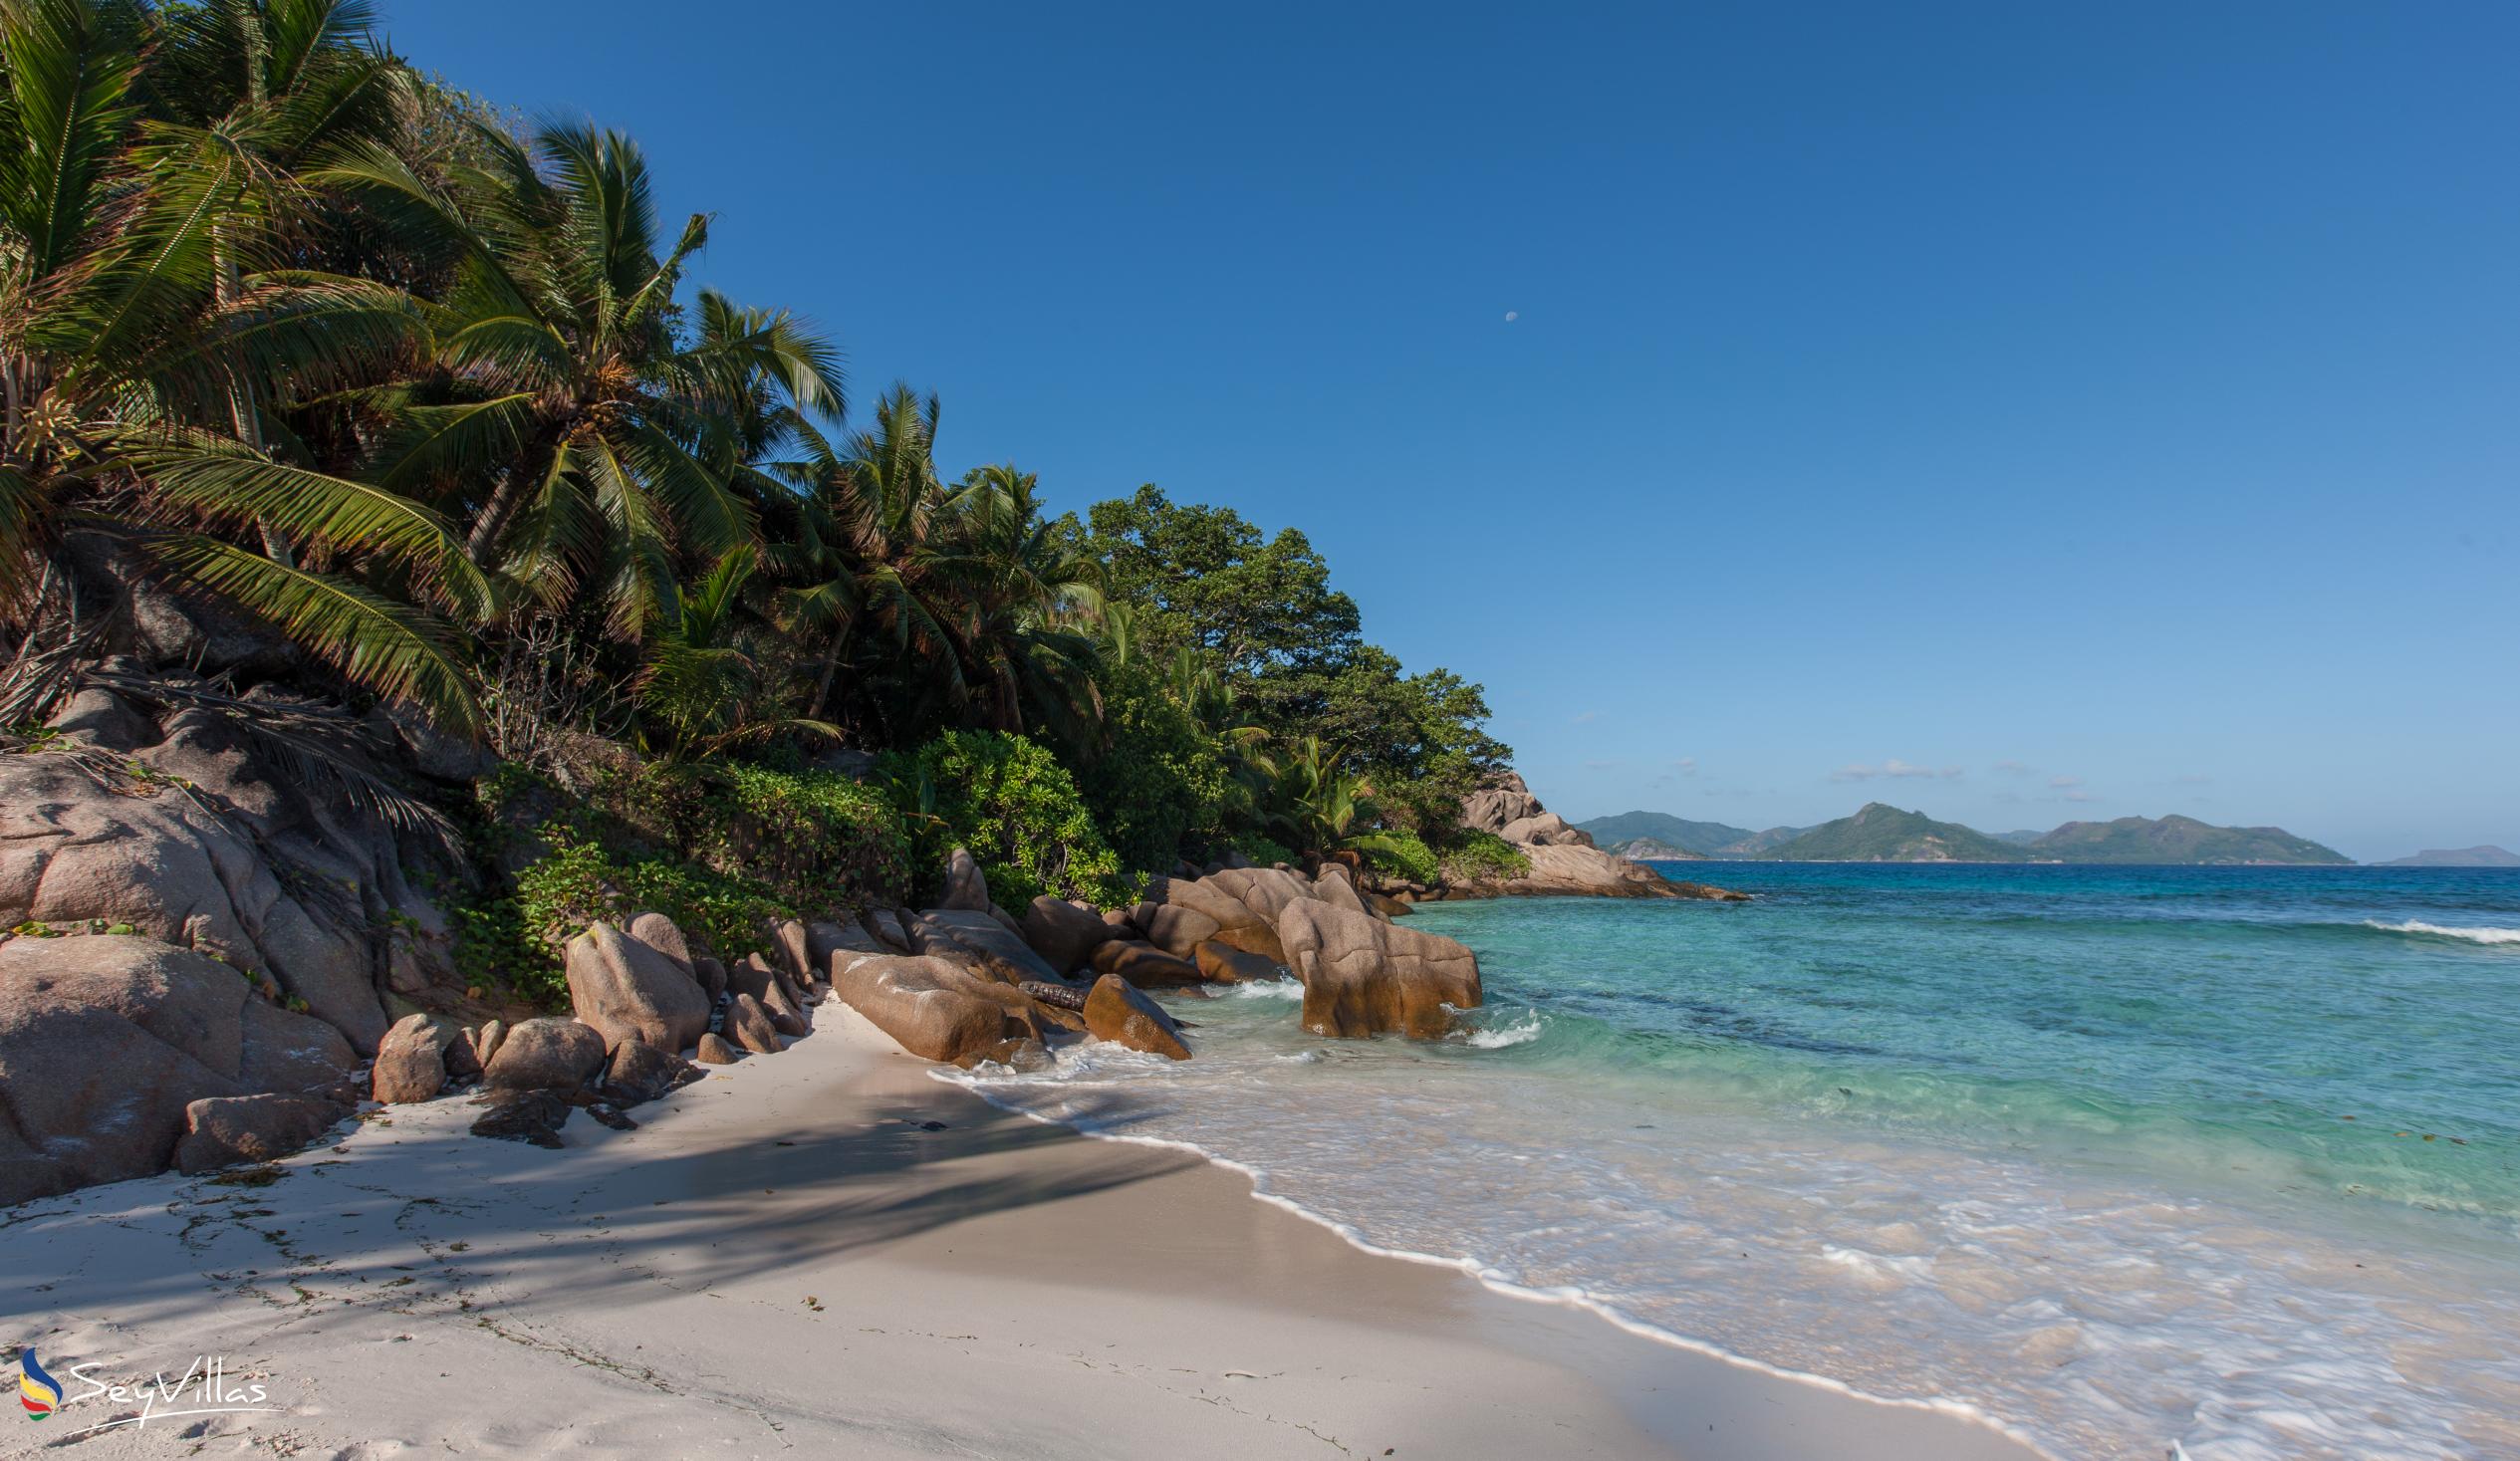 Foto 39: O'Soleil Chalets - Spiagge - La Digue (Seychelles)